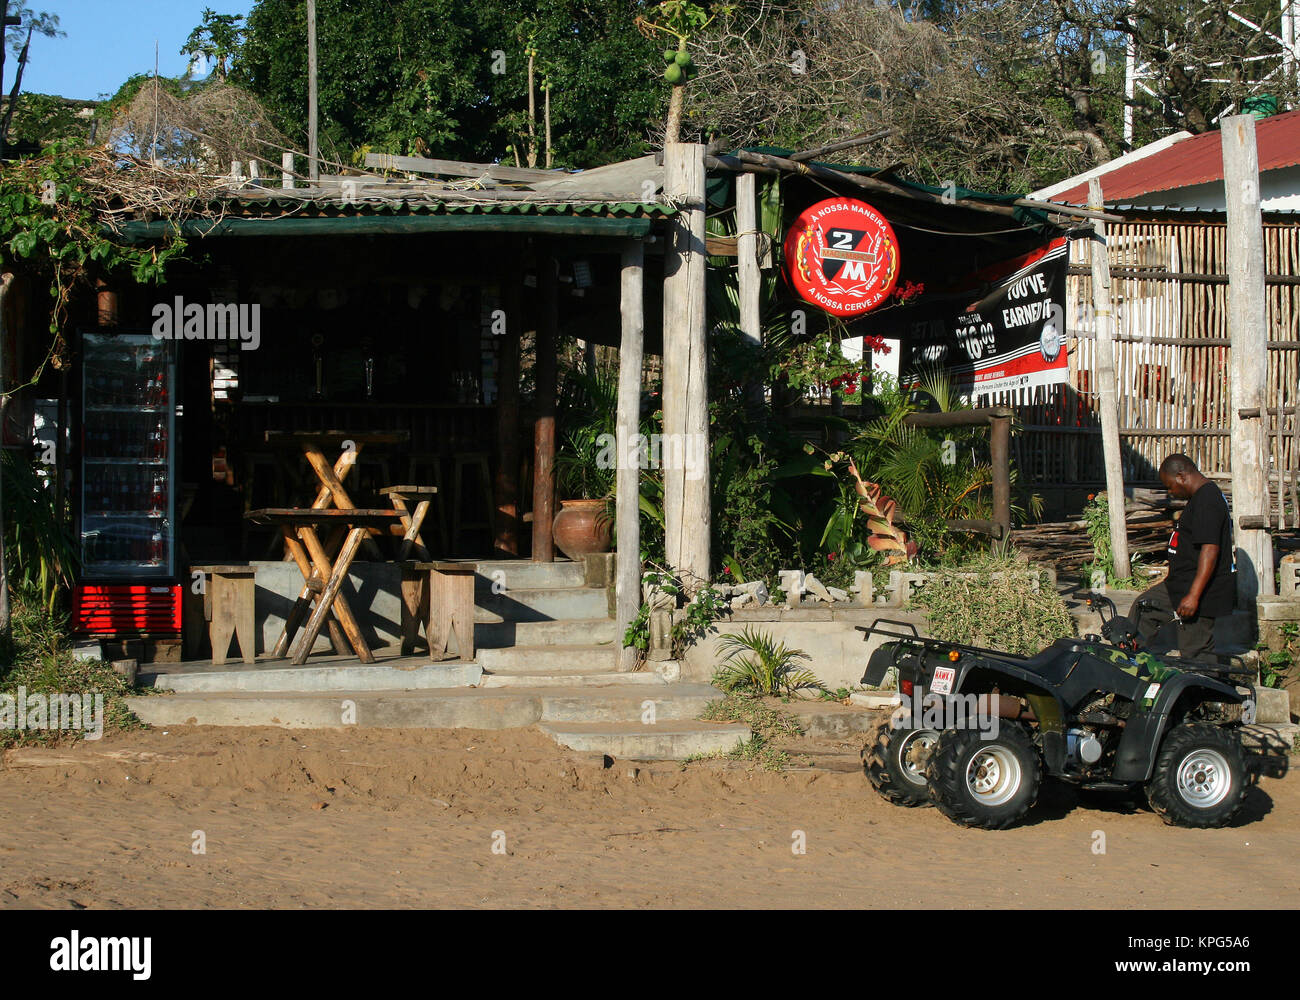 Mosambik, Bar im Freien unter einem Carport in Ponta Do Ouro  Stockfotografie - Alamy